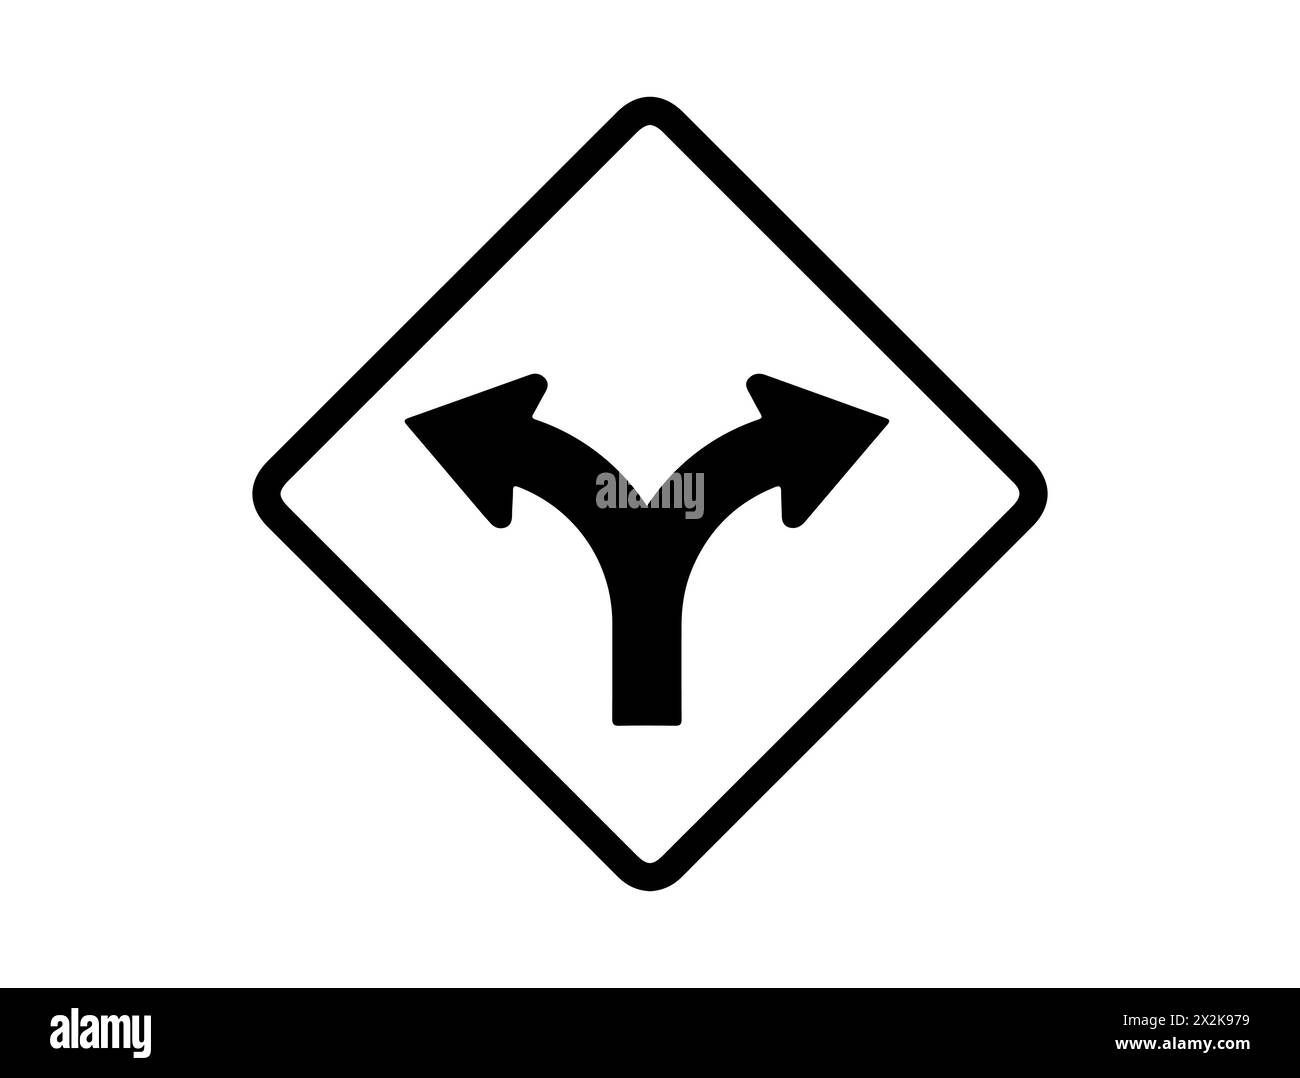 Fork road sign silhouette vector art Stock Vector